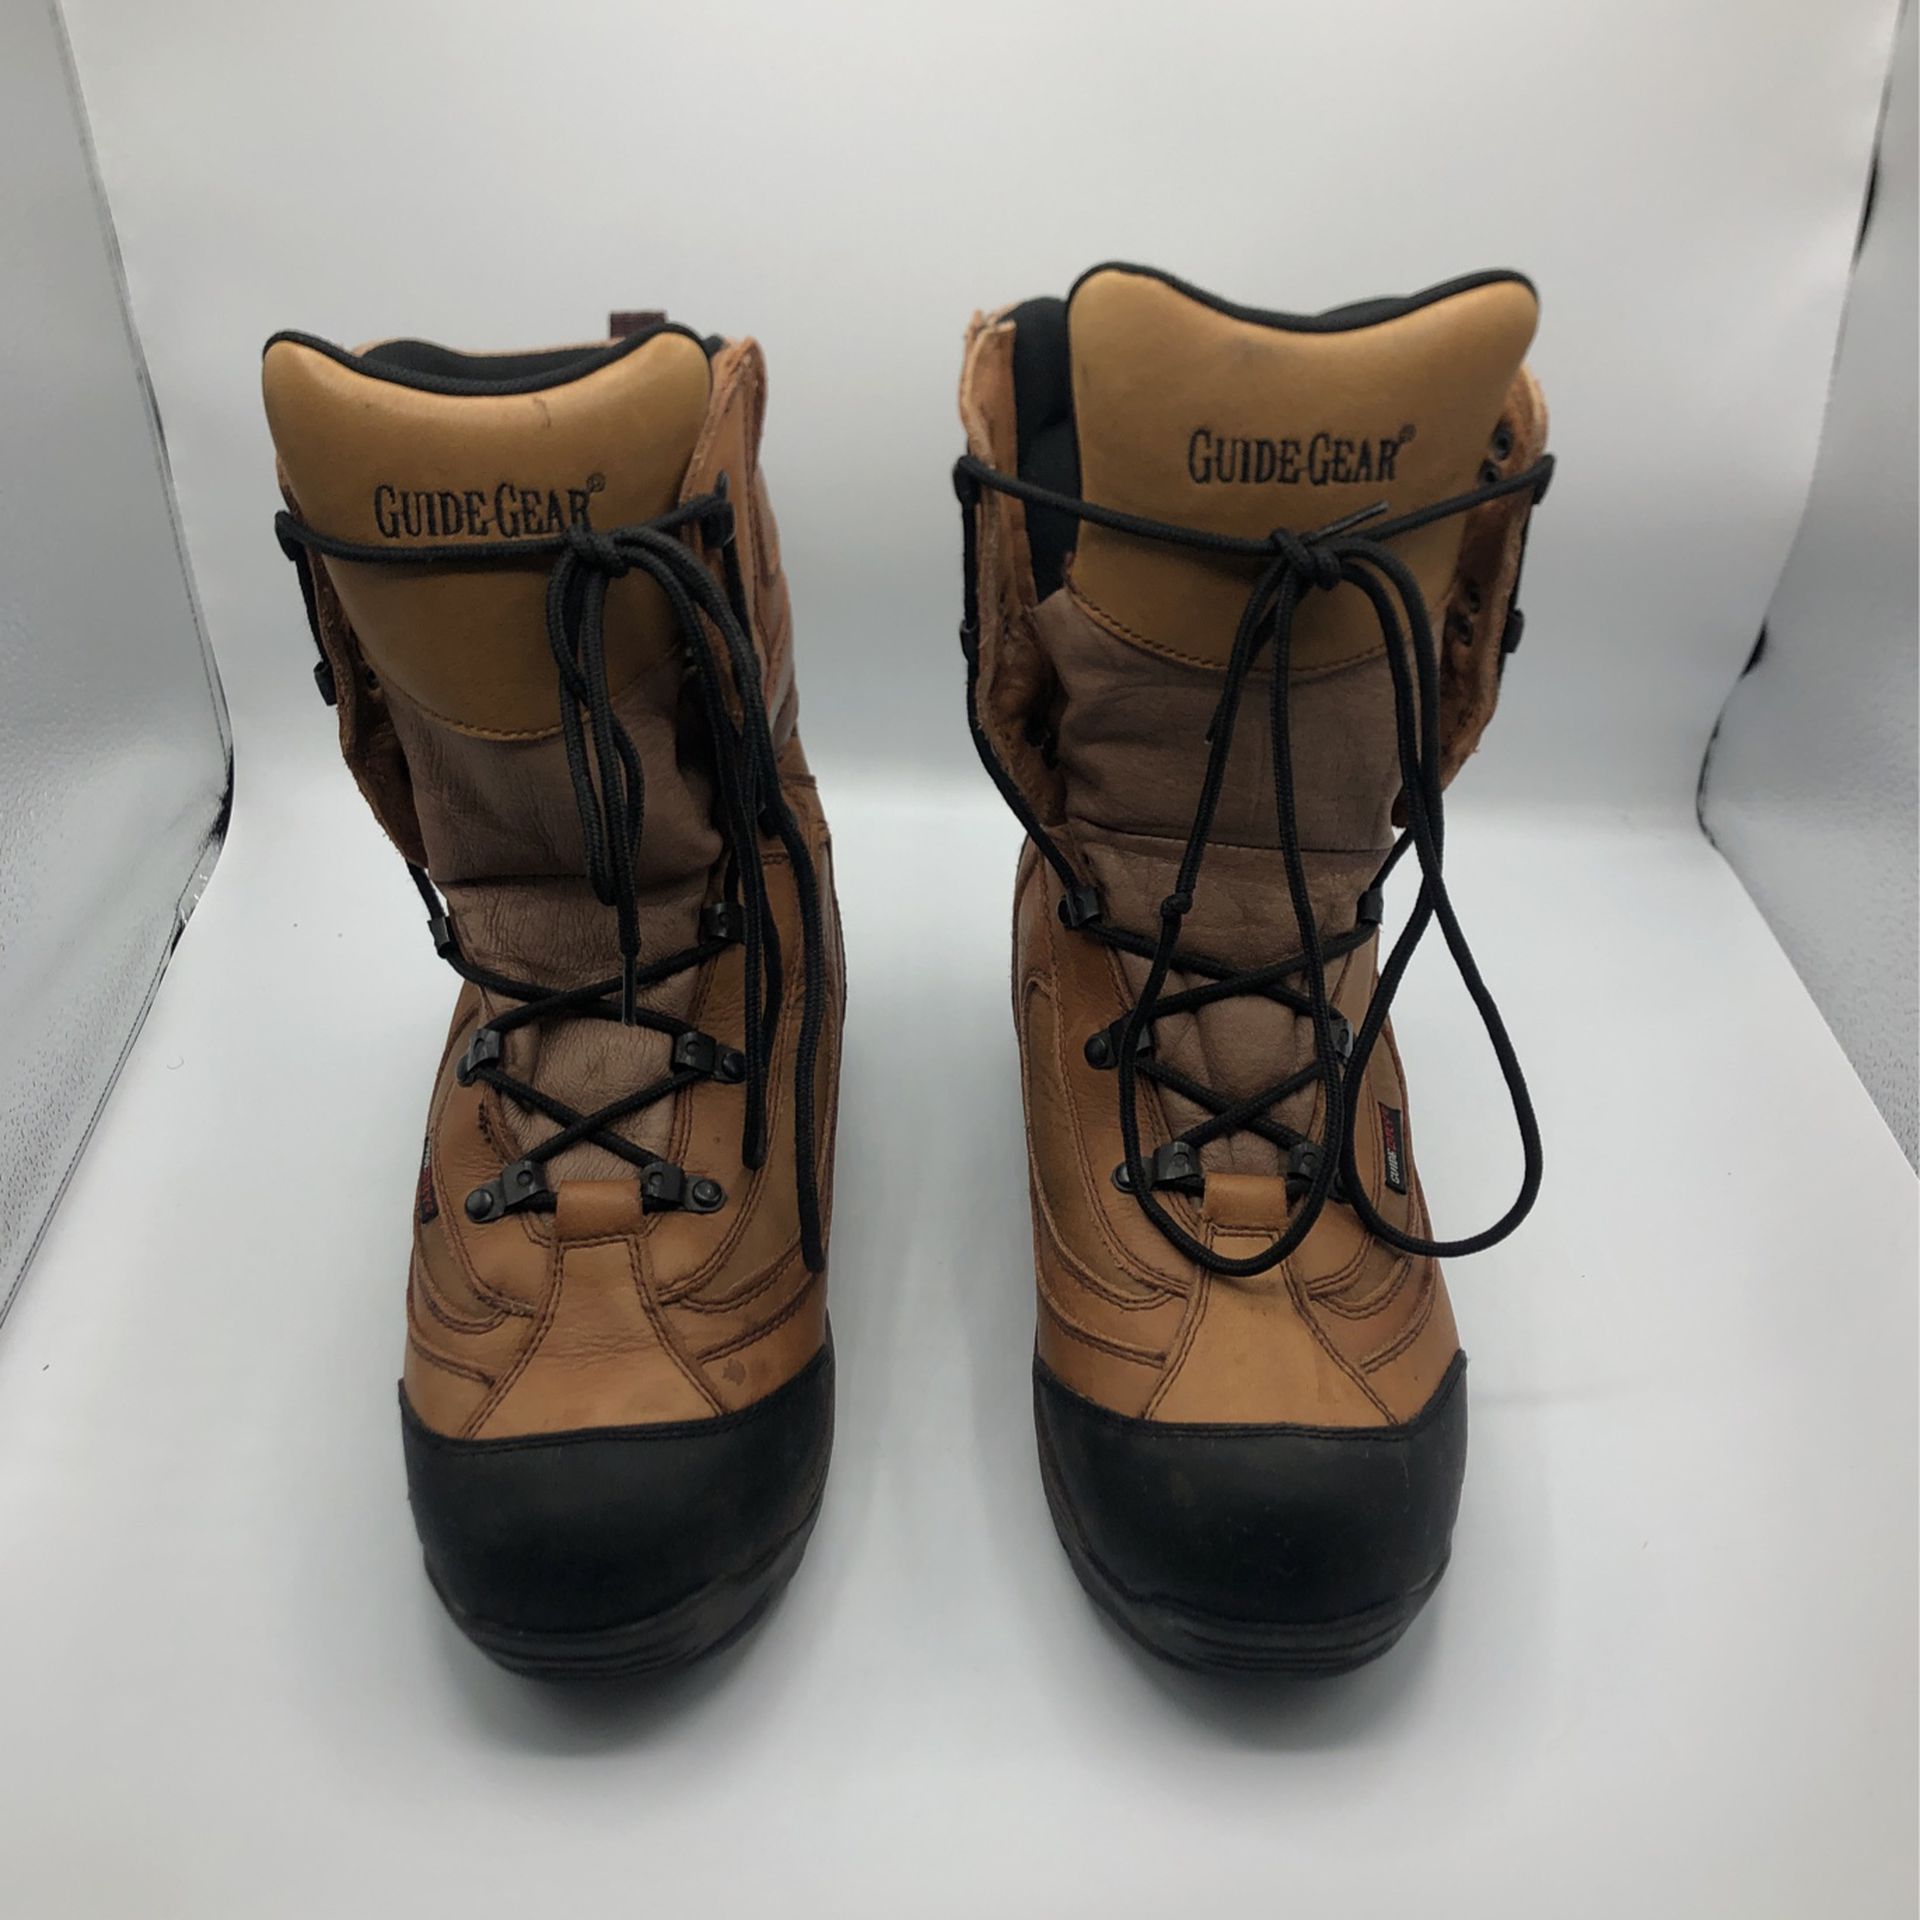 Guide Gear Boots Thinsulate Waterproof Men’s  Size 10.5